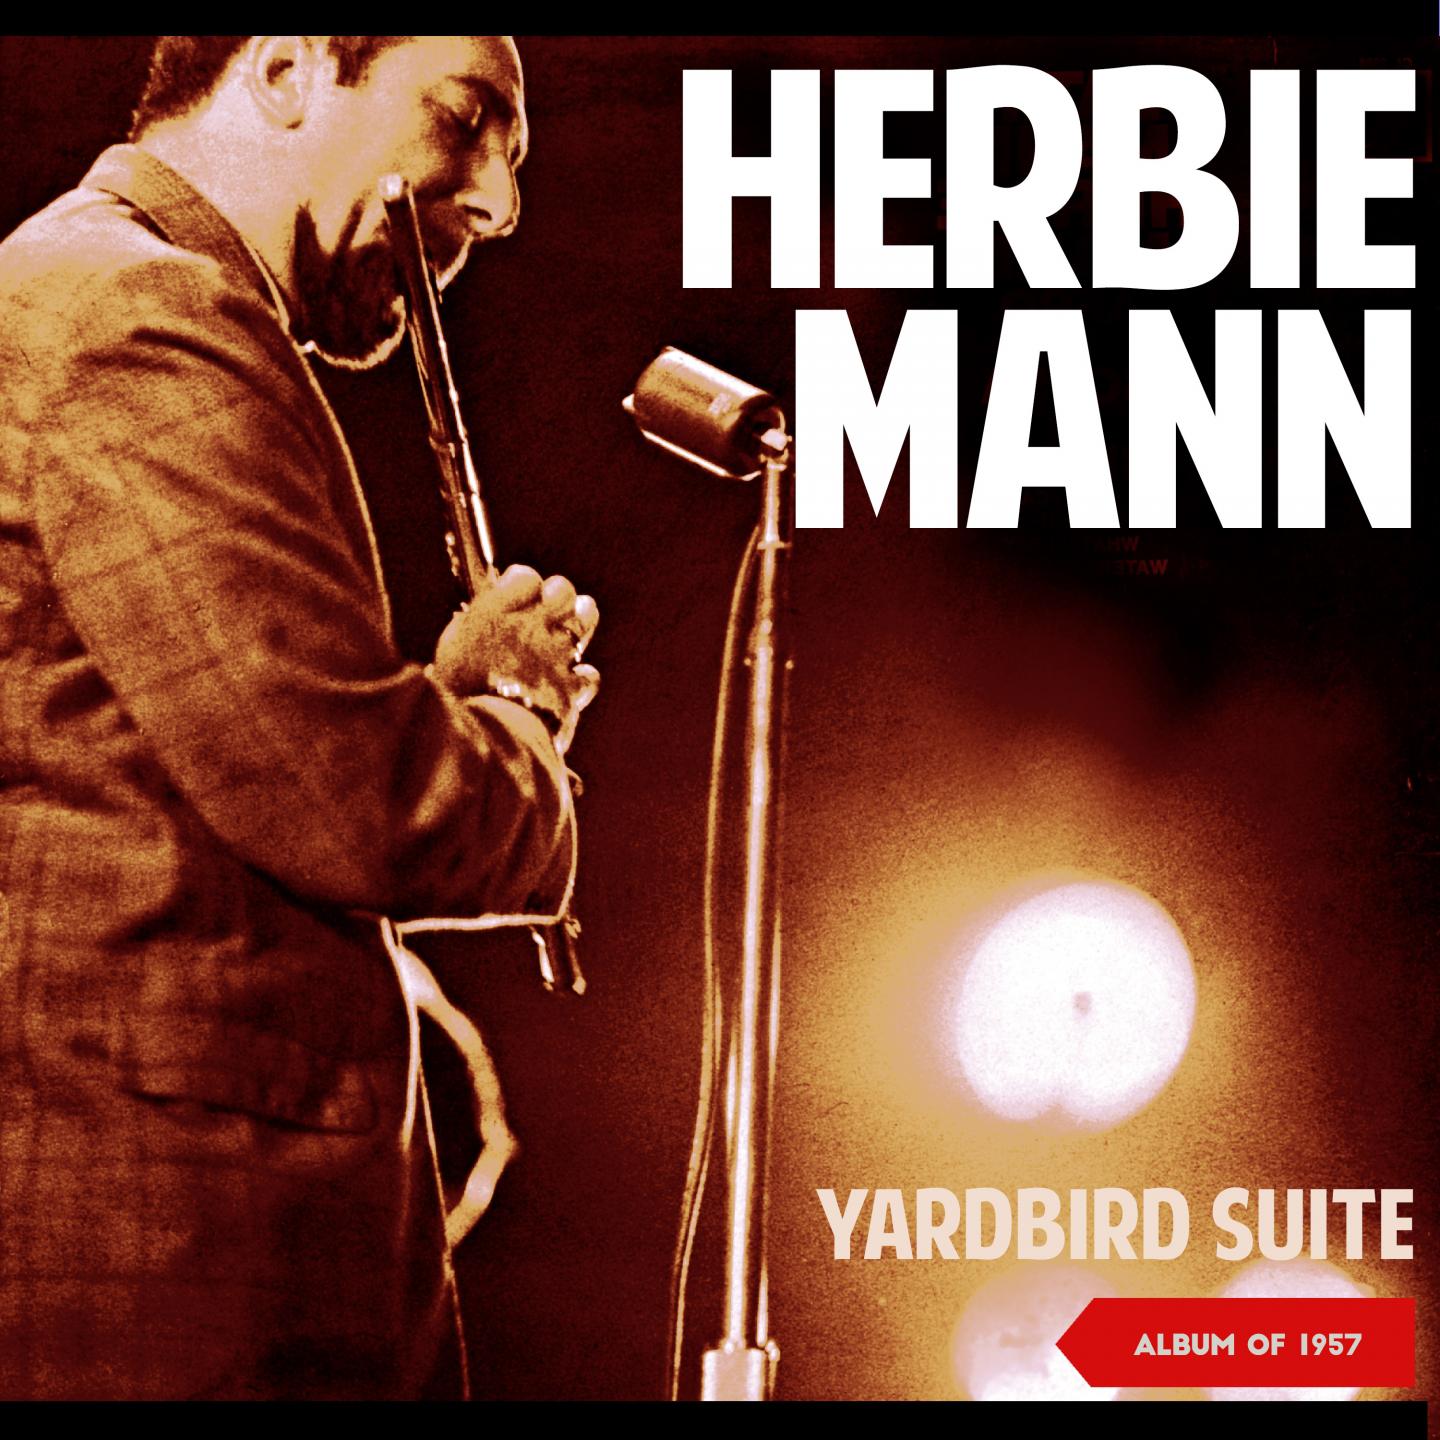 Yardbird Suite (Album of 1957)